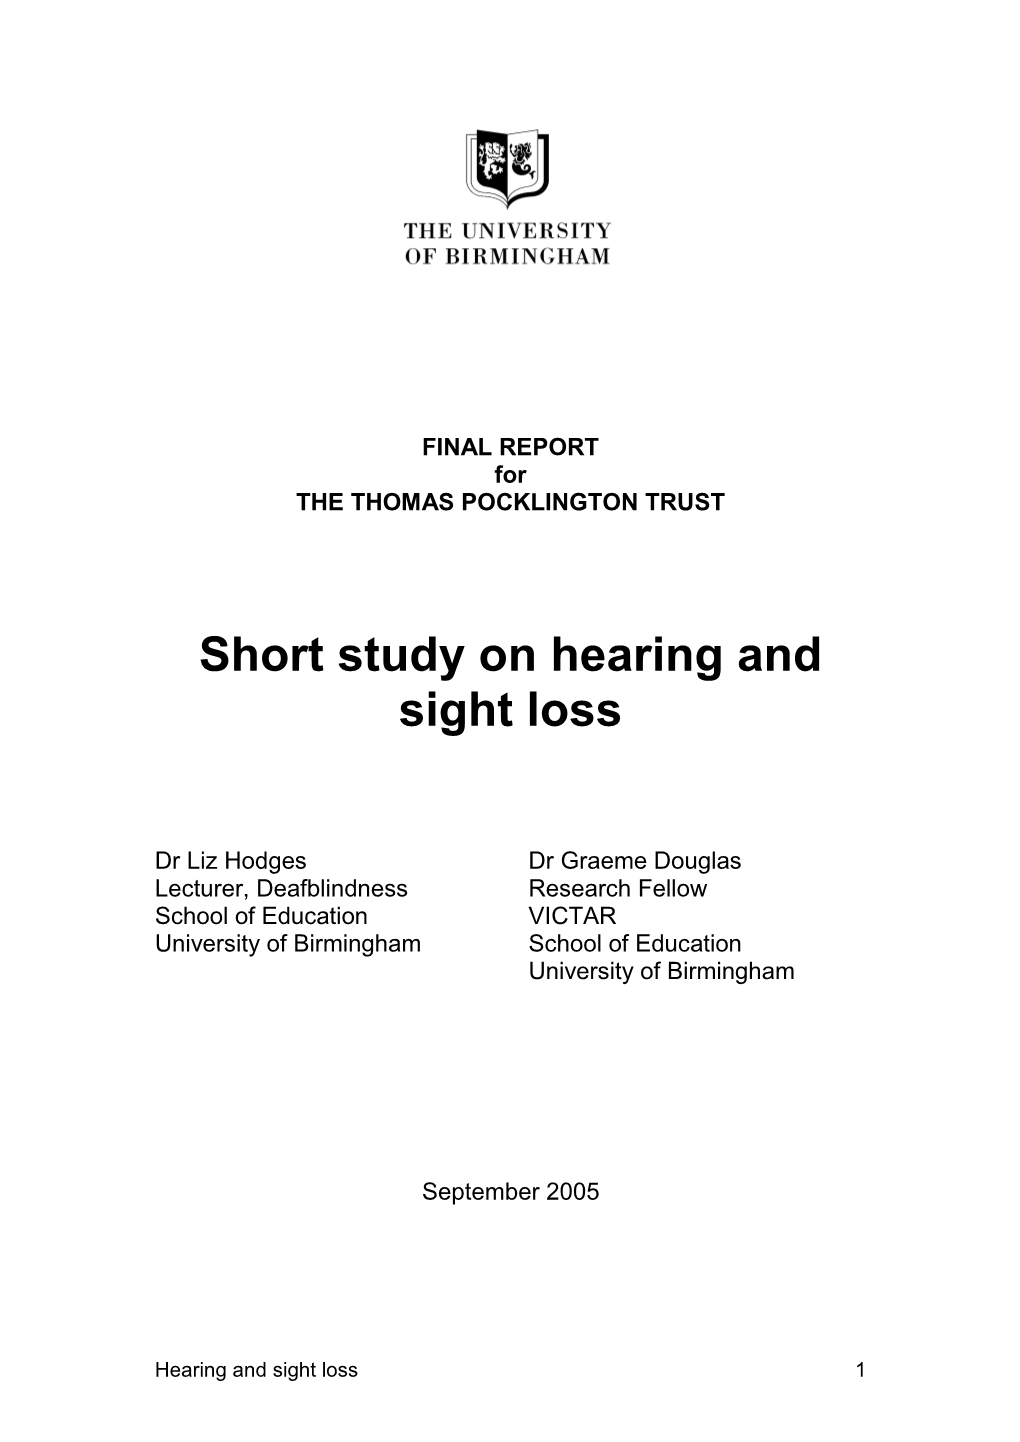 Short Study on Hearing and Sight Loss